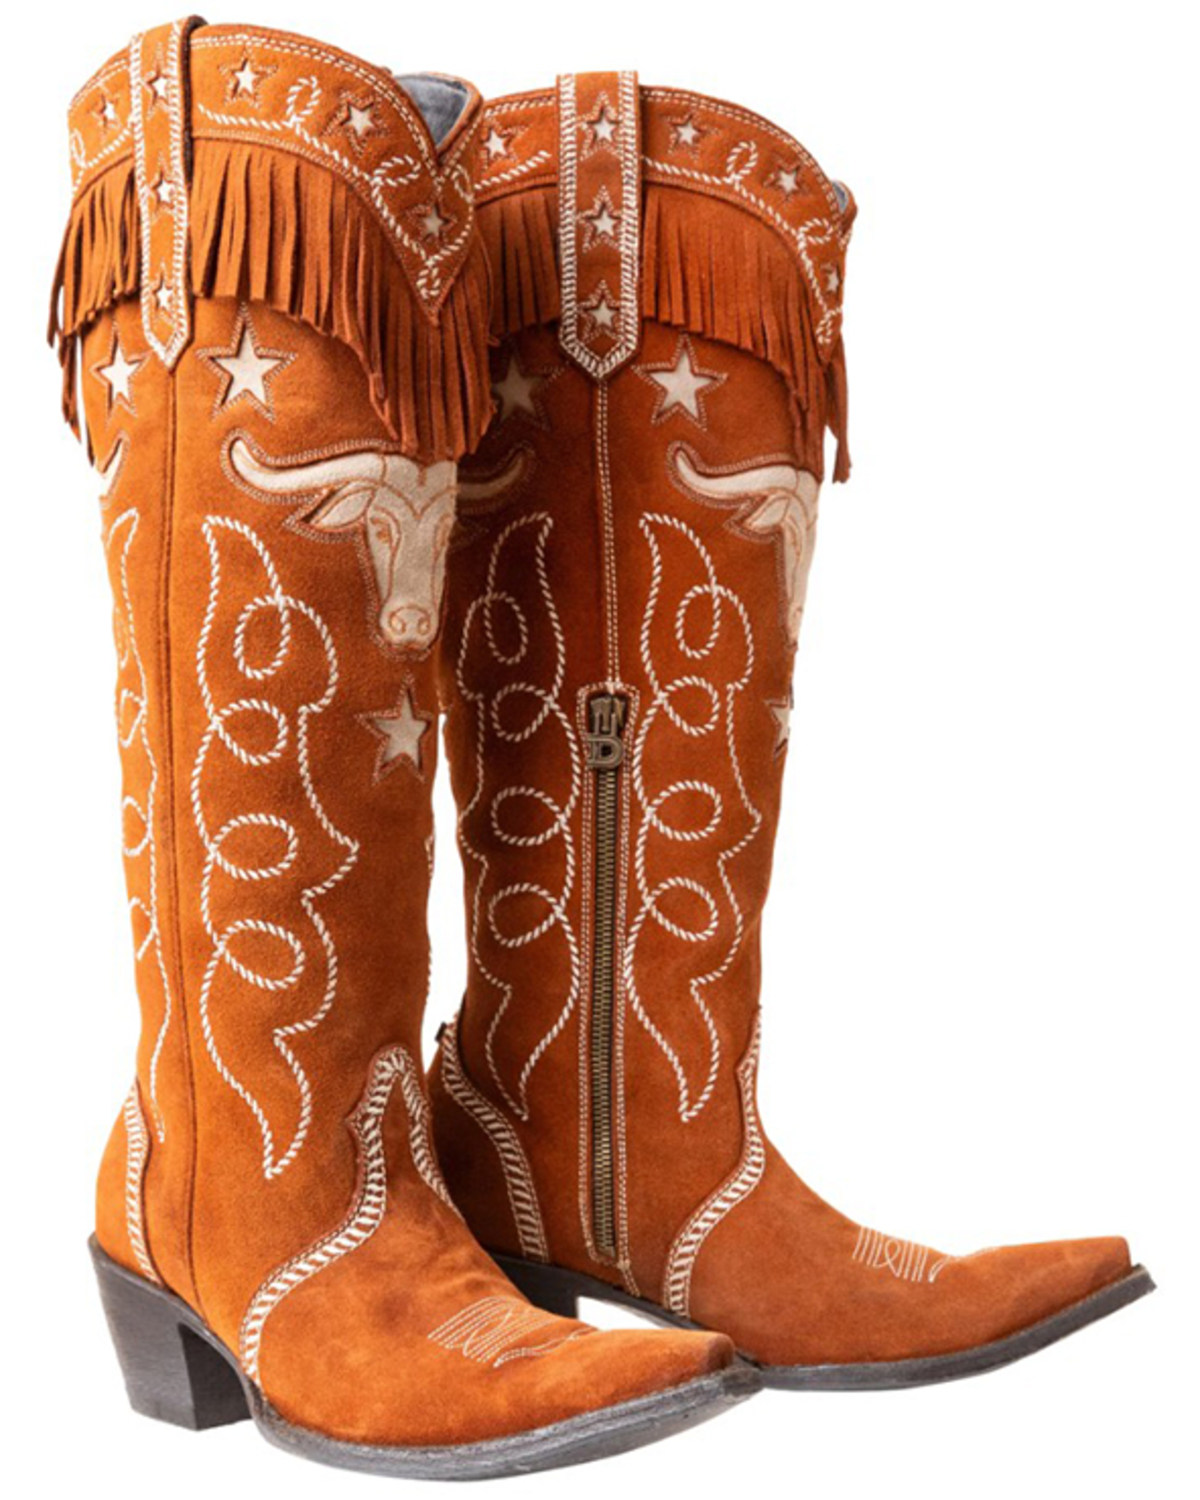 Old Gringo Women's Dobie Tall Western Boots - Snip Toe